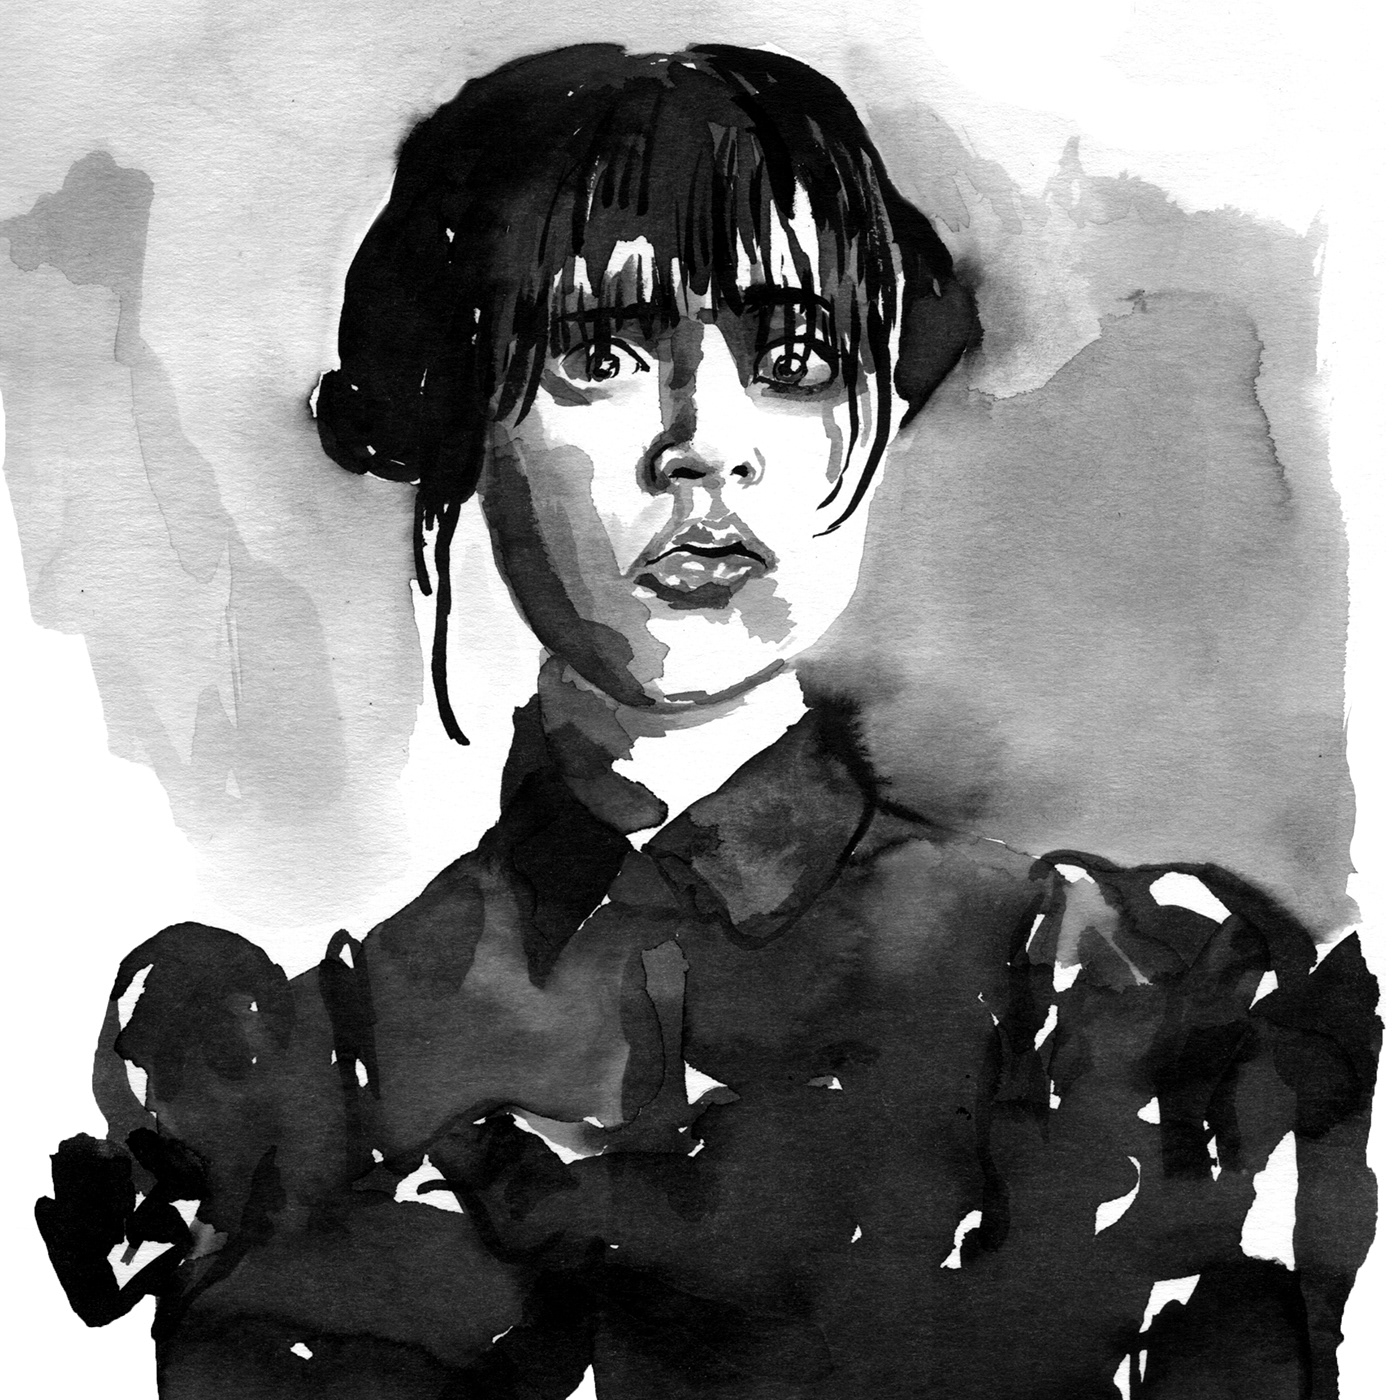 goth illustrated portraits ink drawing Jenna Ortega Netflix series pen and ink pen and ink illustration portrait illustrator Wednesday Addams wednesday netflix